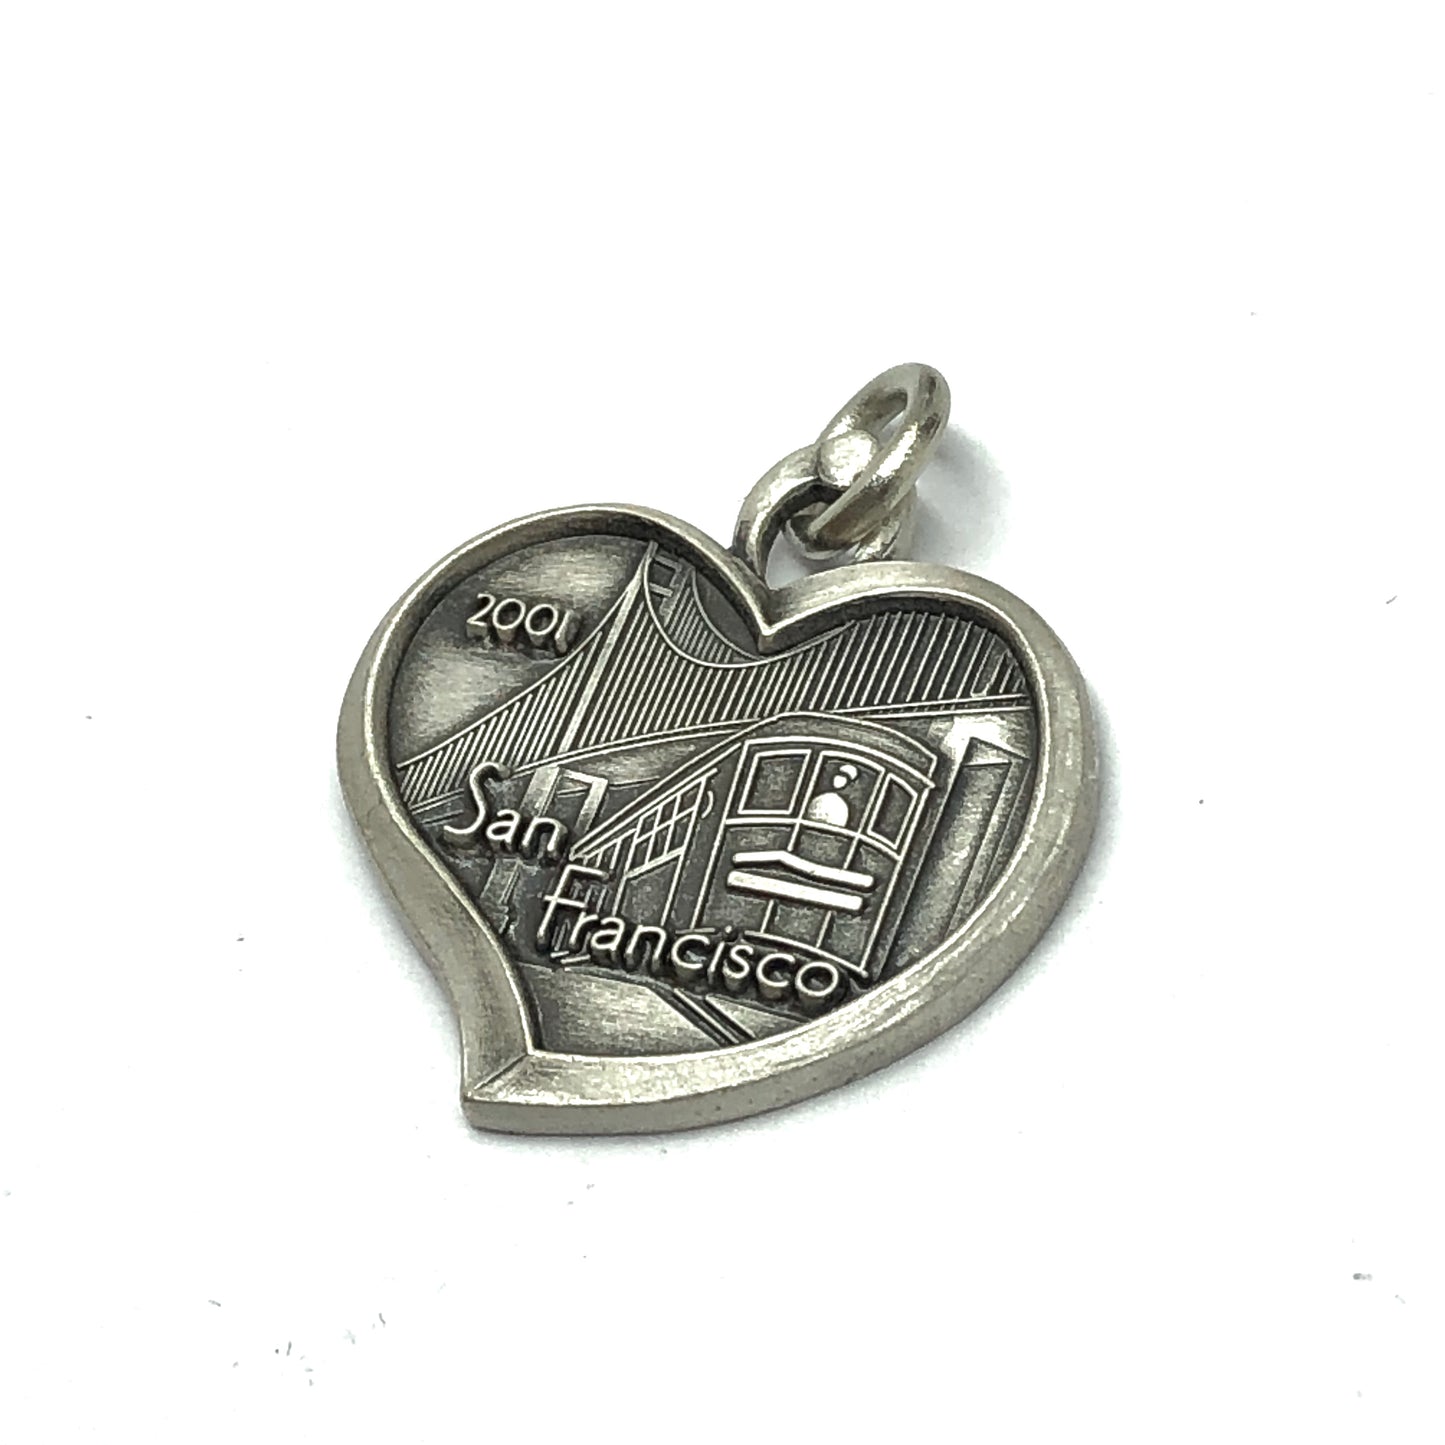 Vintage Jewelry - Sterling Silver 2001 San Francisco Golden Gate Bridge Heart Charm Pendant - Blingschlingers Jewelry